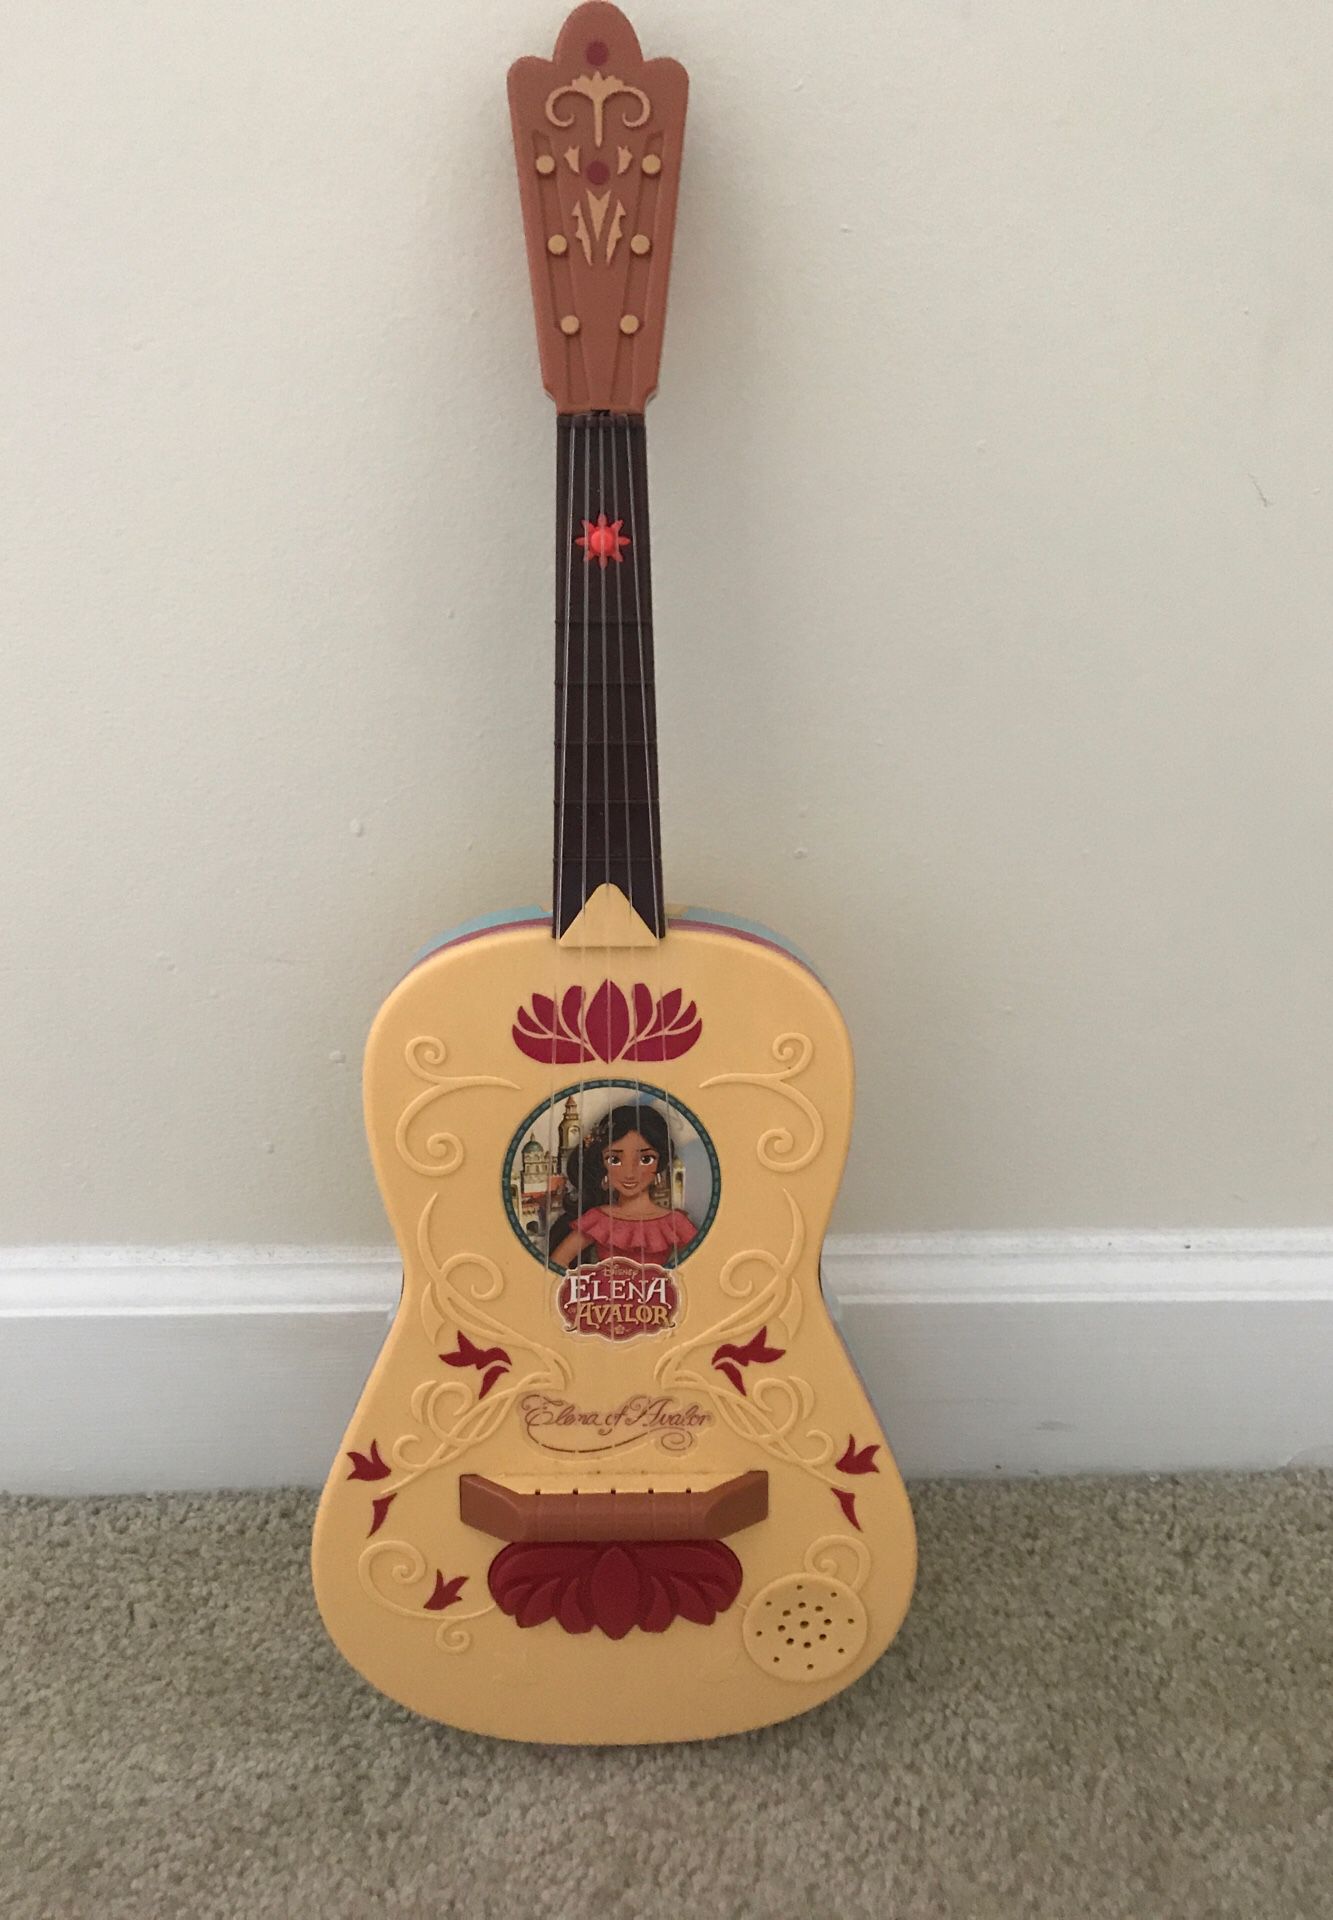 Elena of Avalor toy guitar